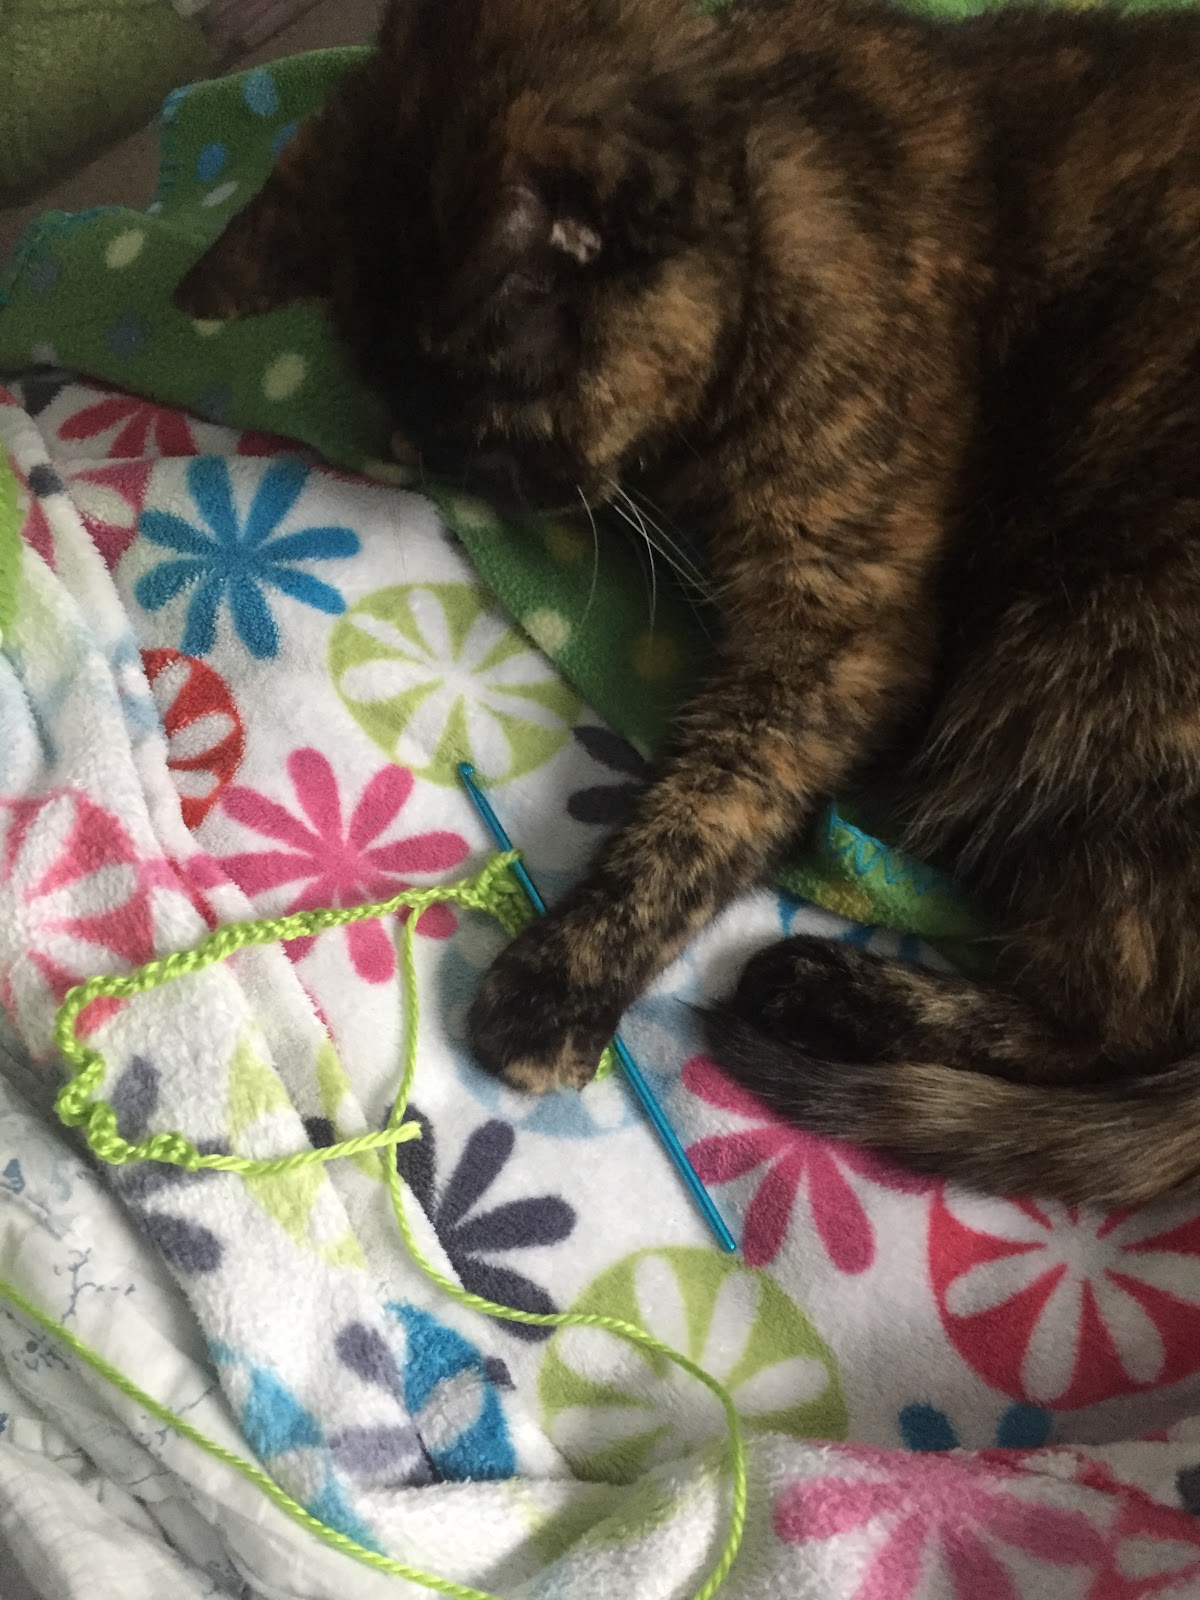 Cat crocheting a blanket